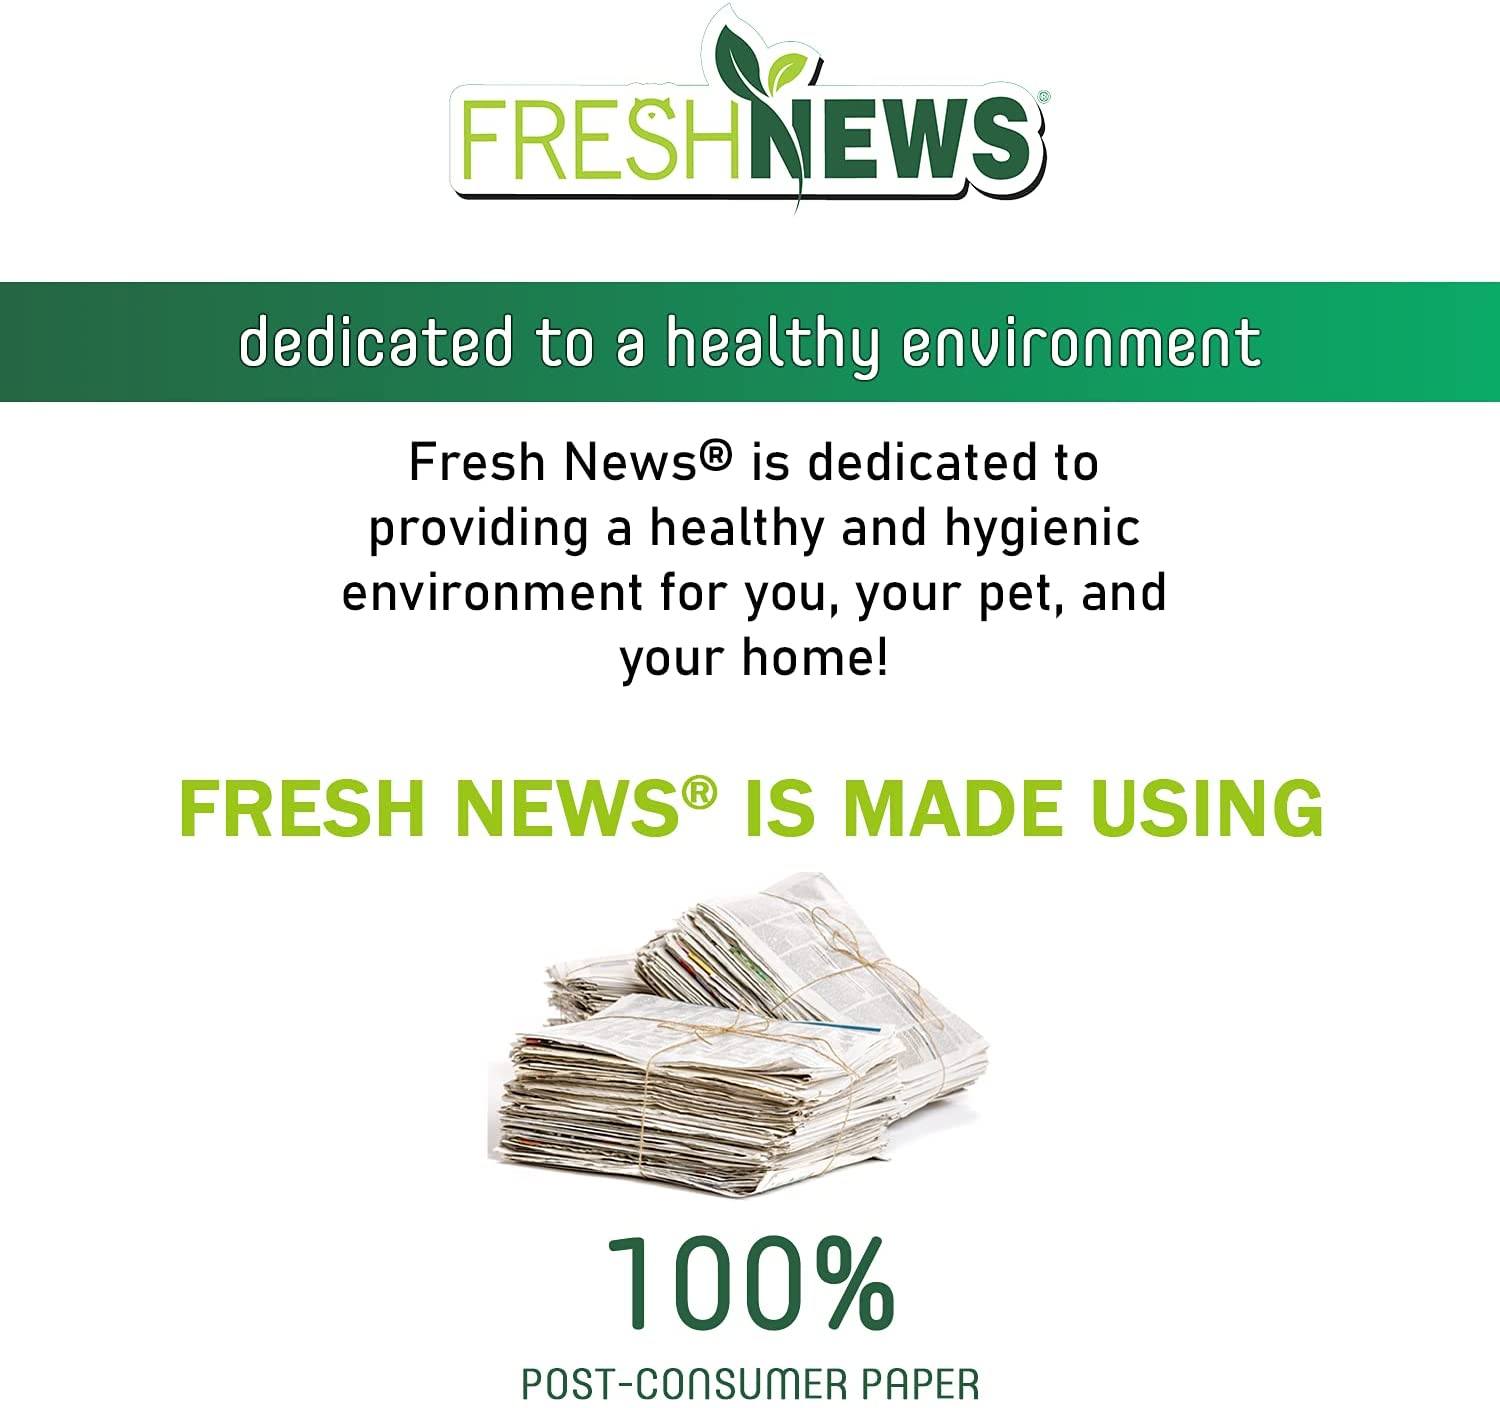 Fresh News Fresh News Cat Litter - 25 lb Bag  